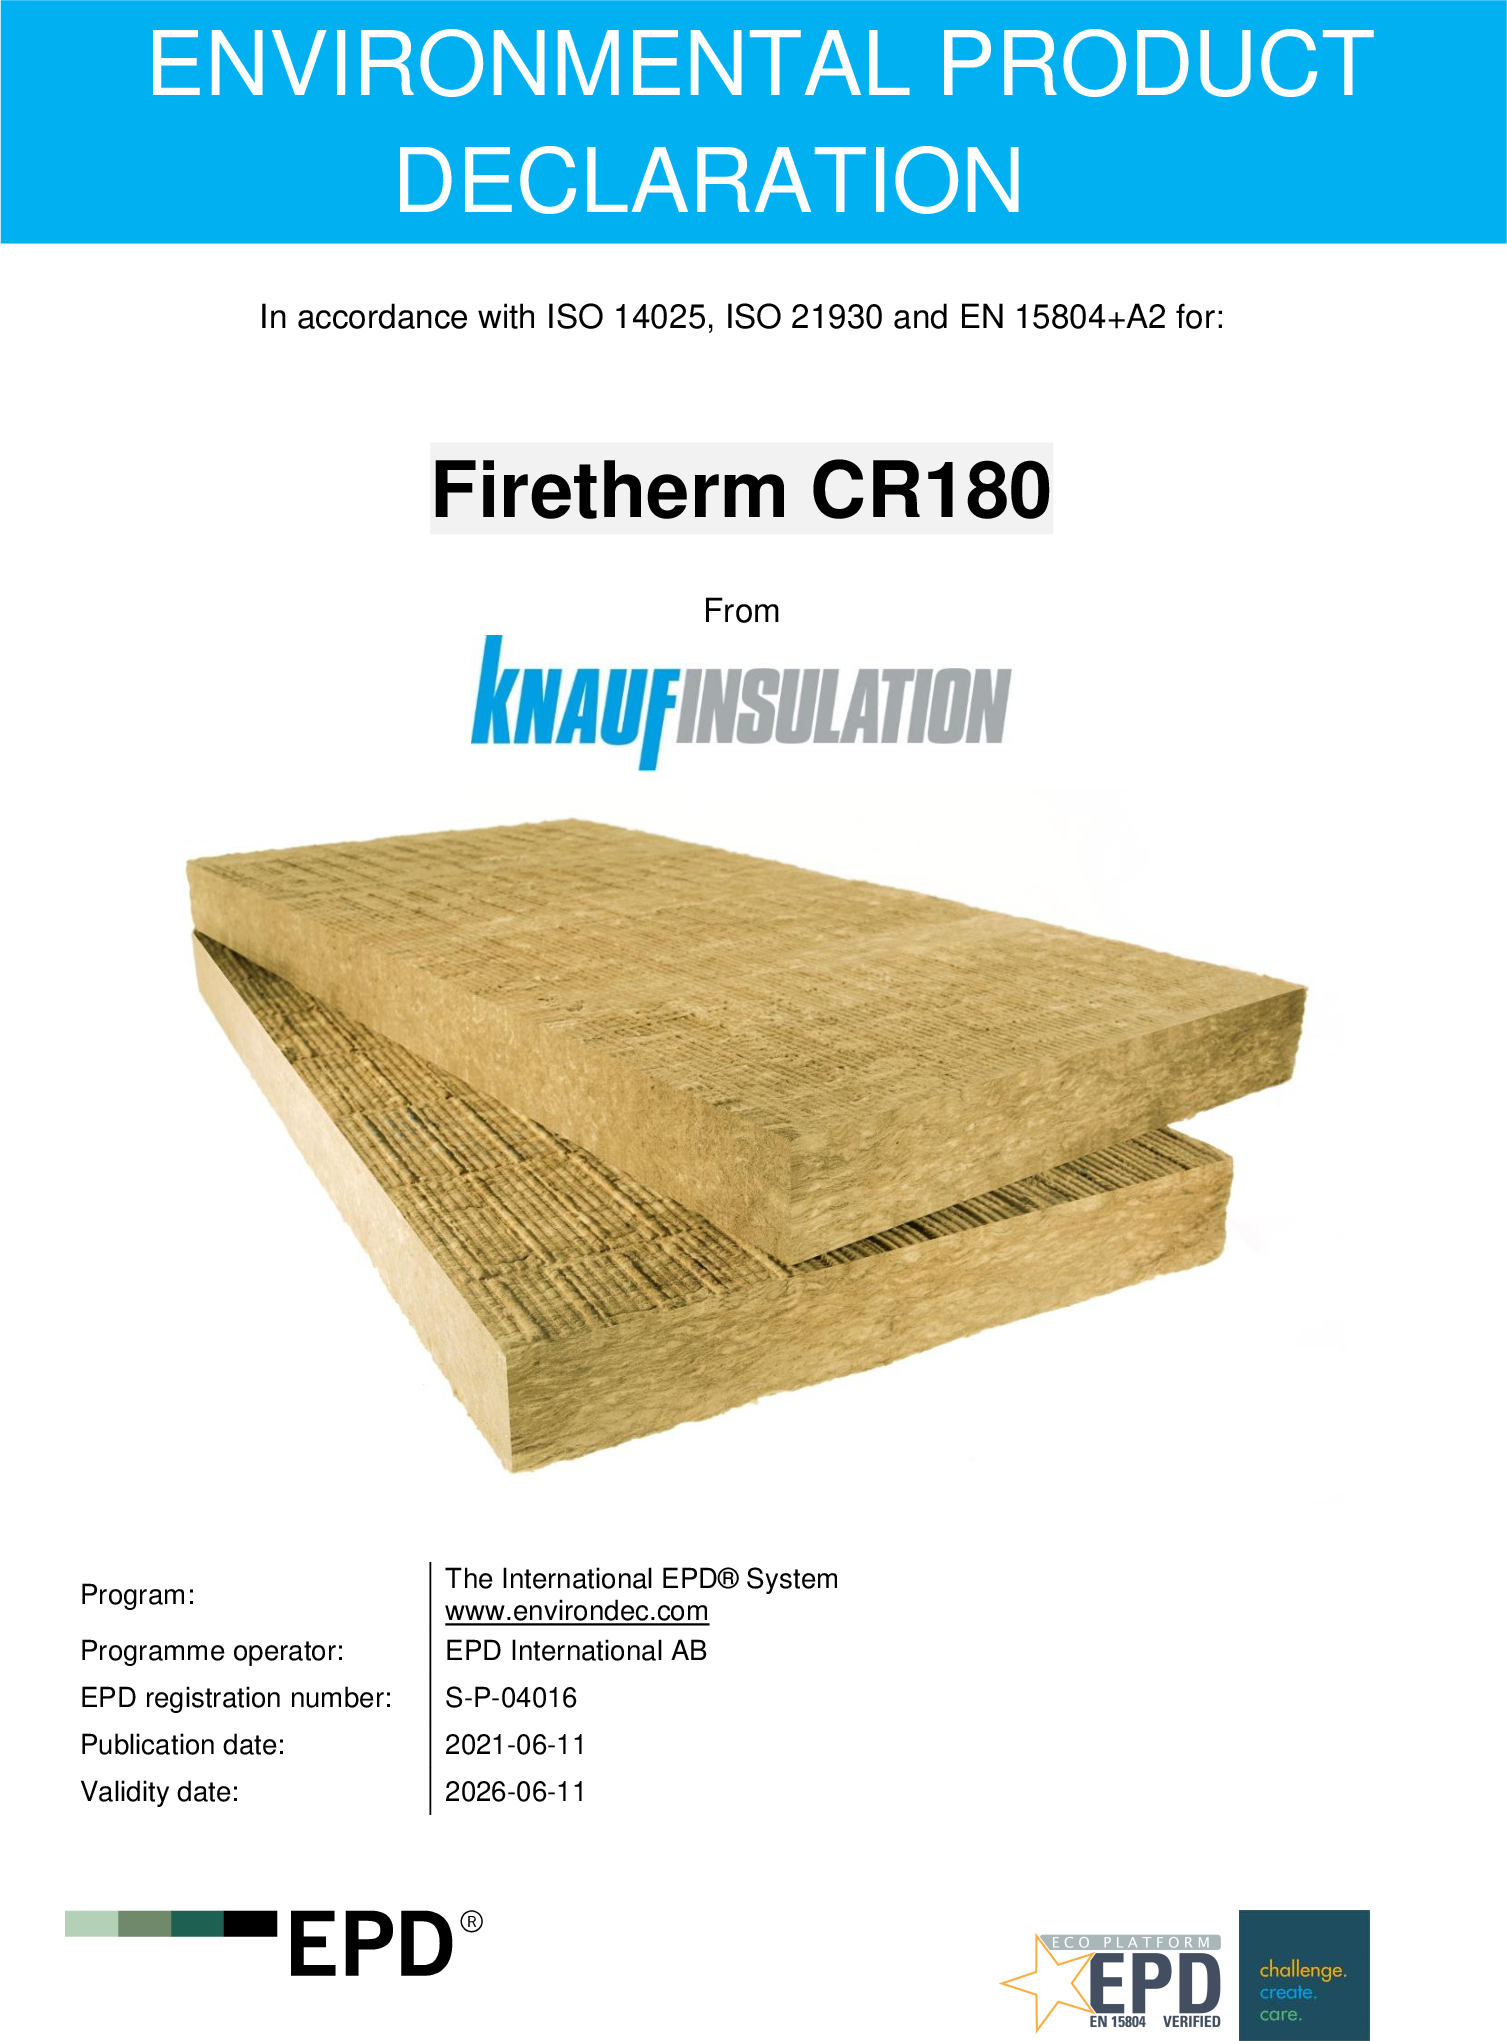 Firetherm CR180